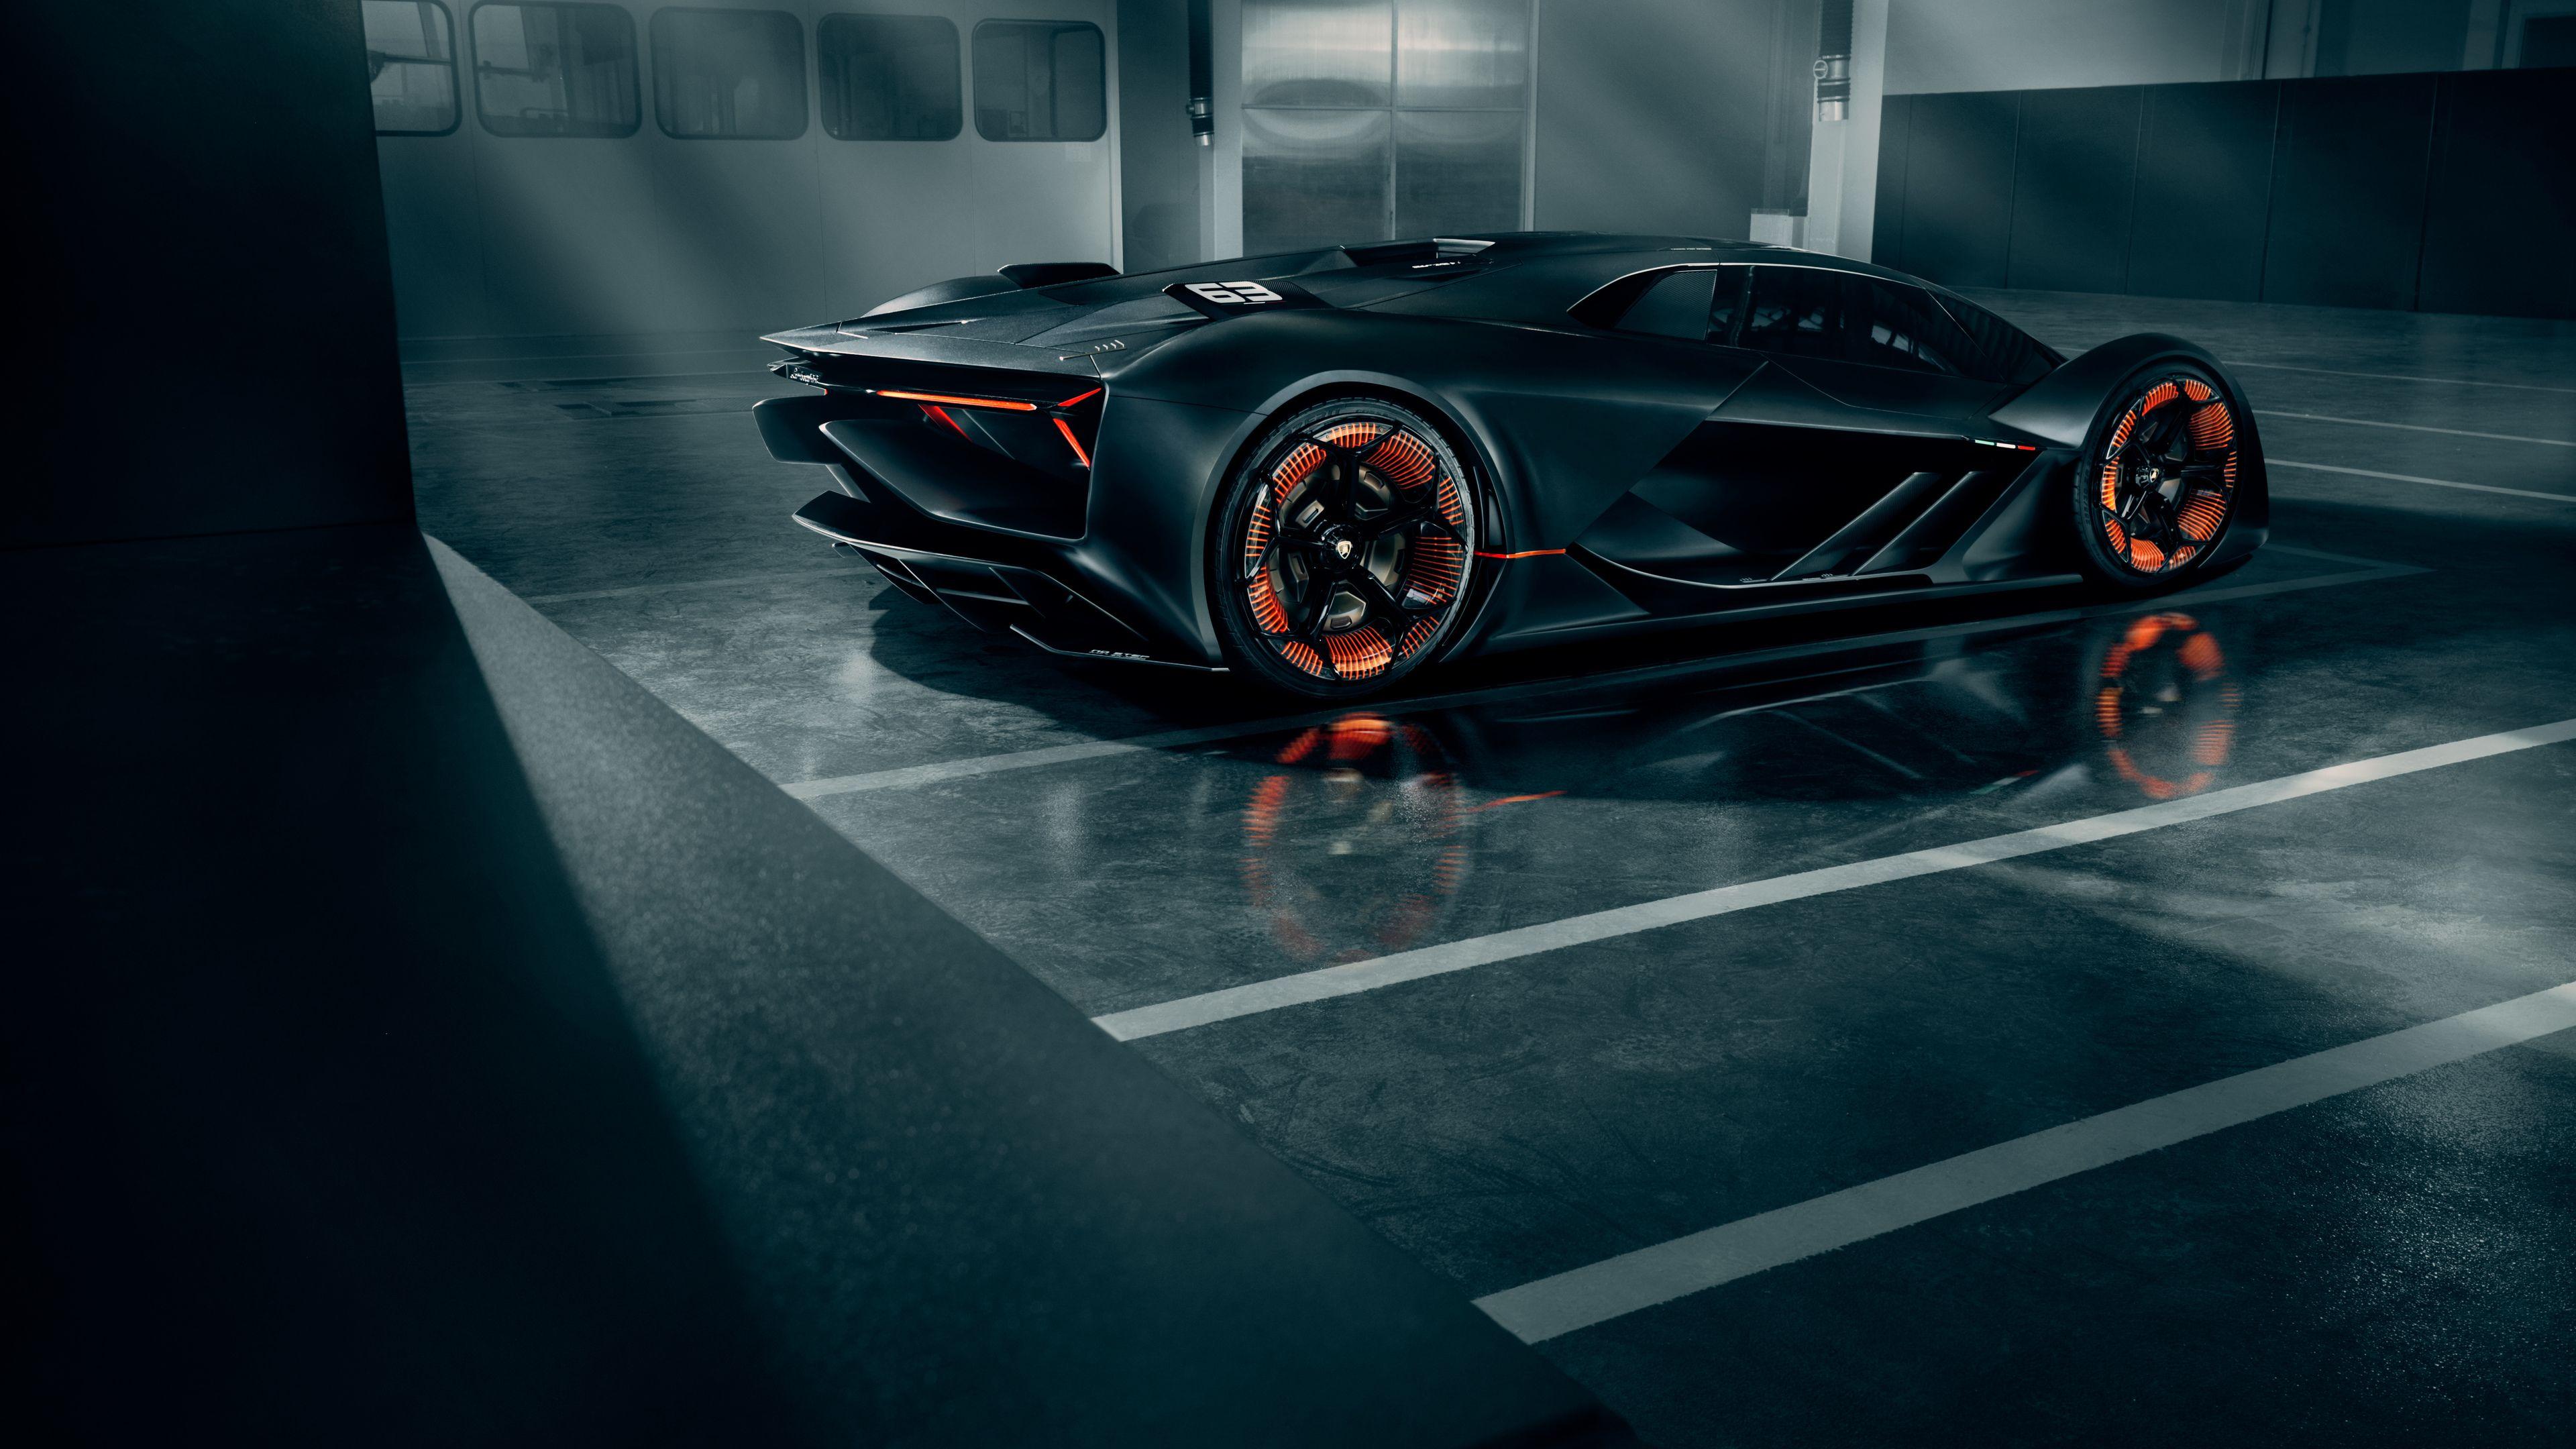 Wallpaper 4k Lamborghini Terzo Millennio 2019 Rear View 2019